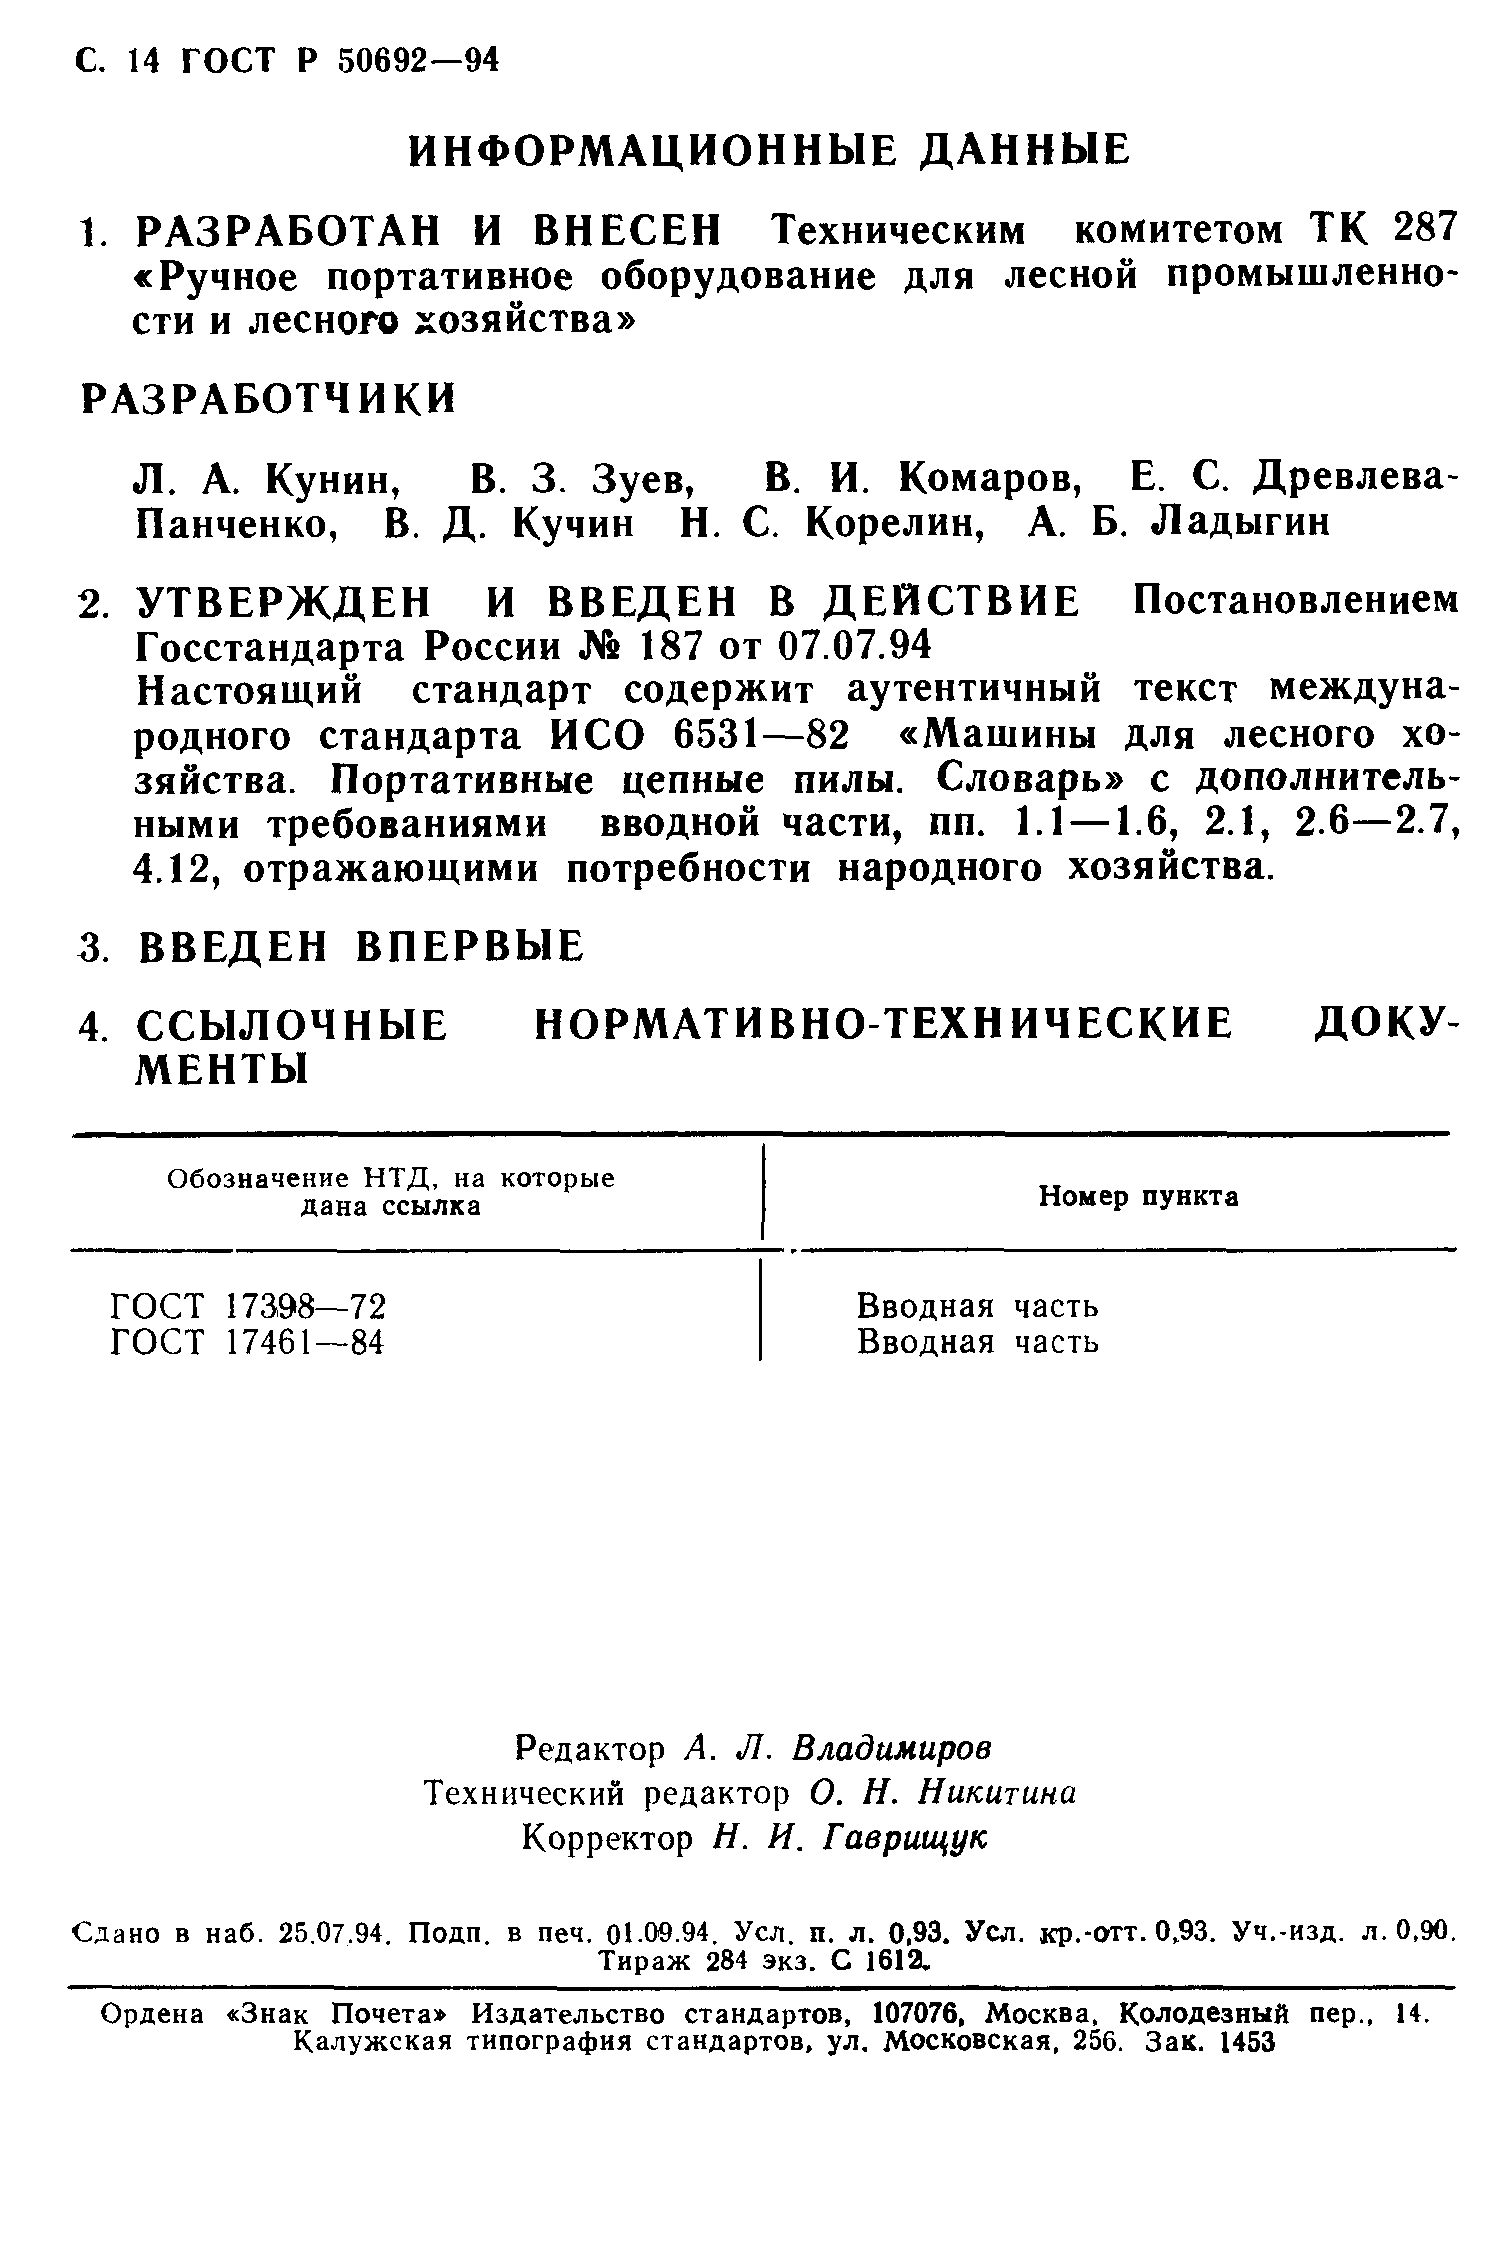 ГОСТ Р 50692-94